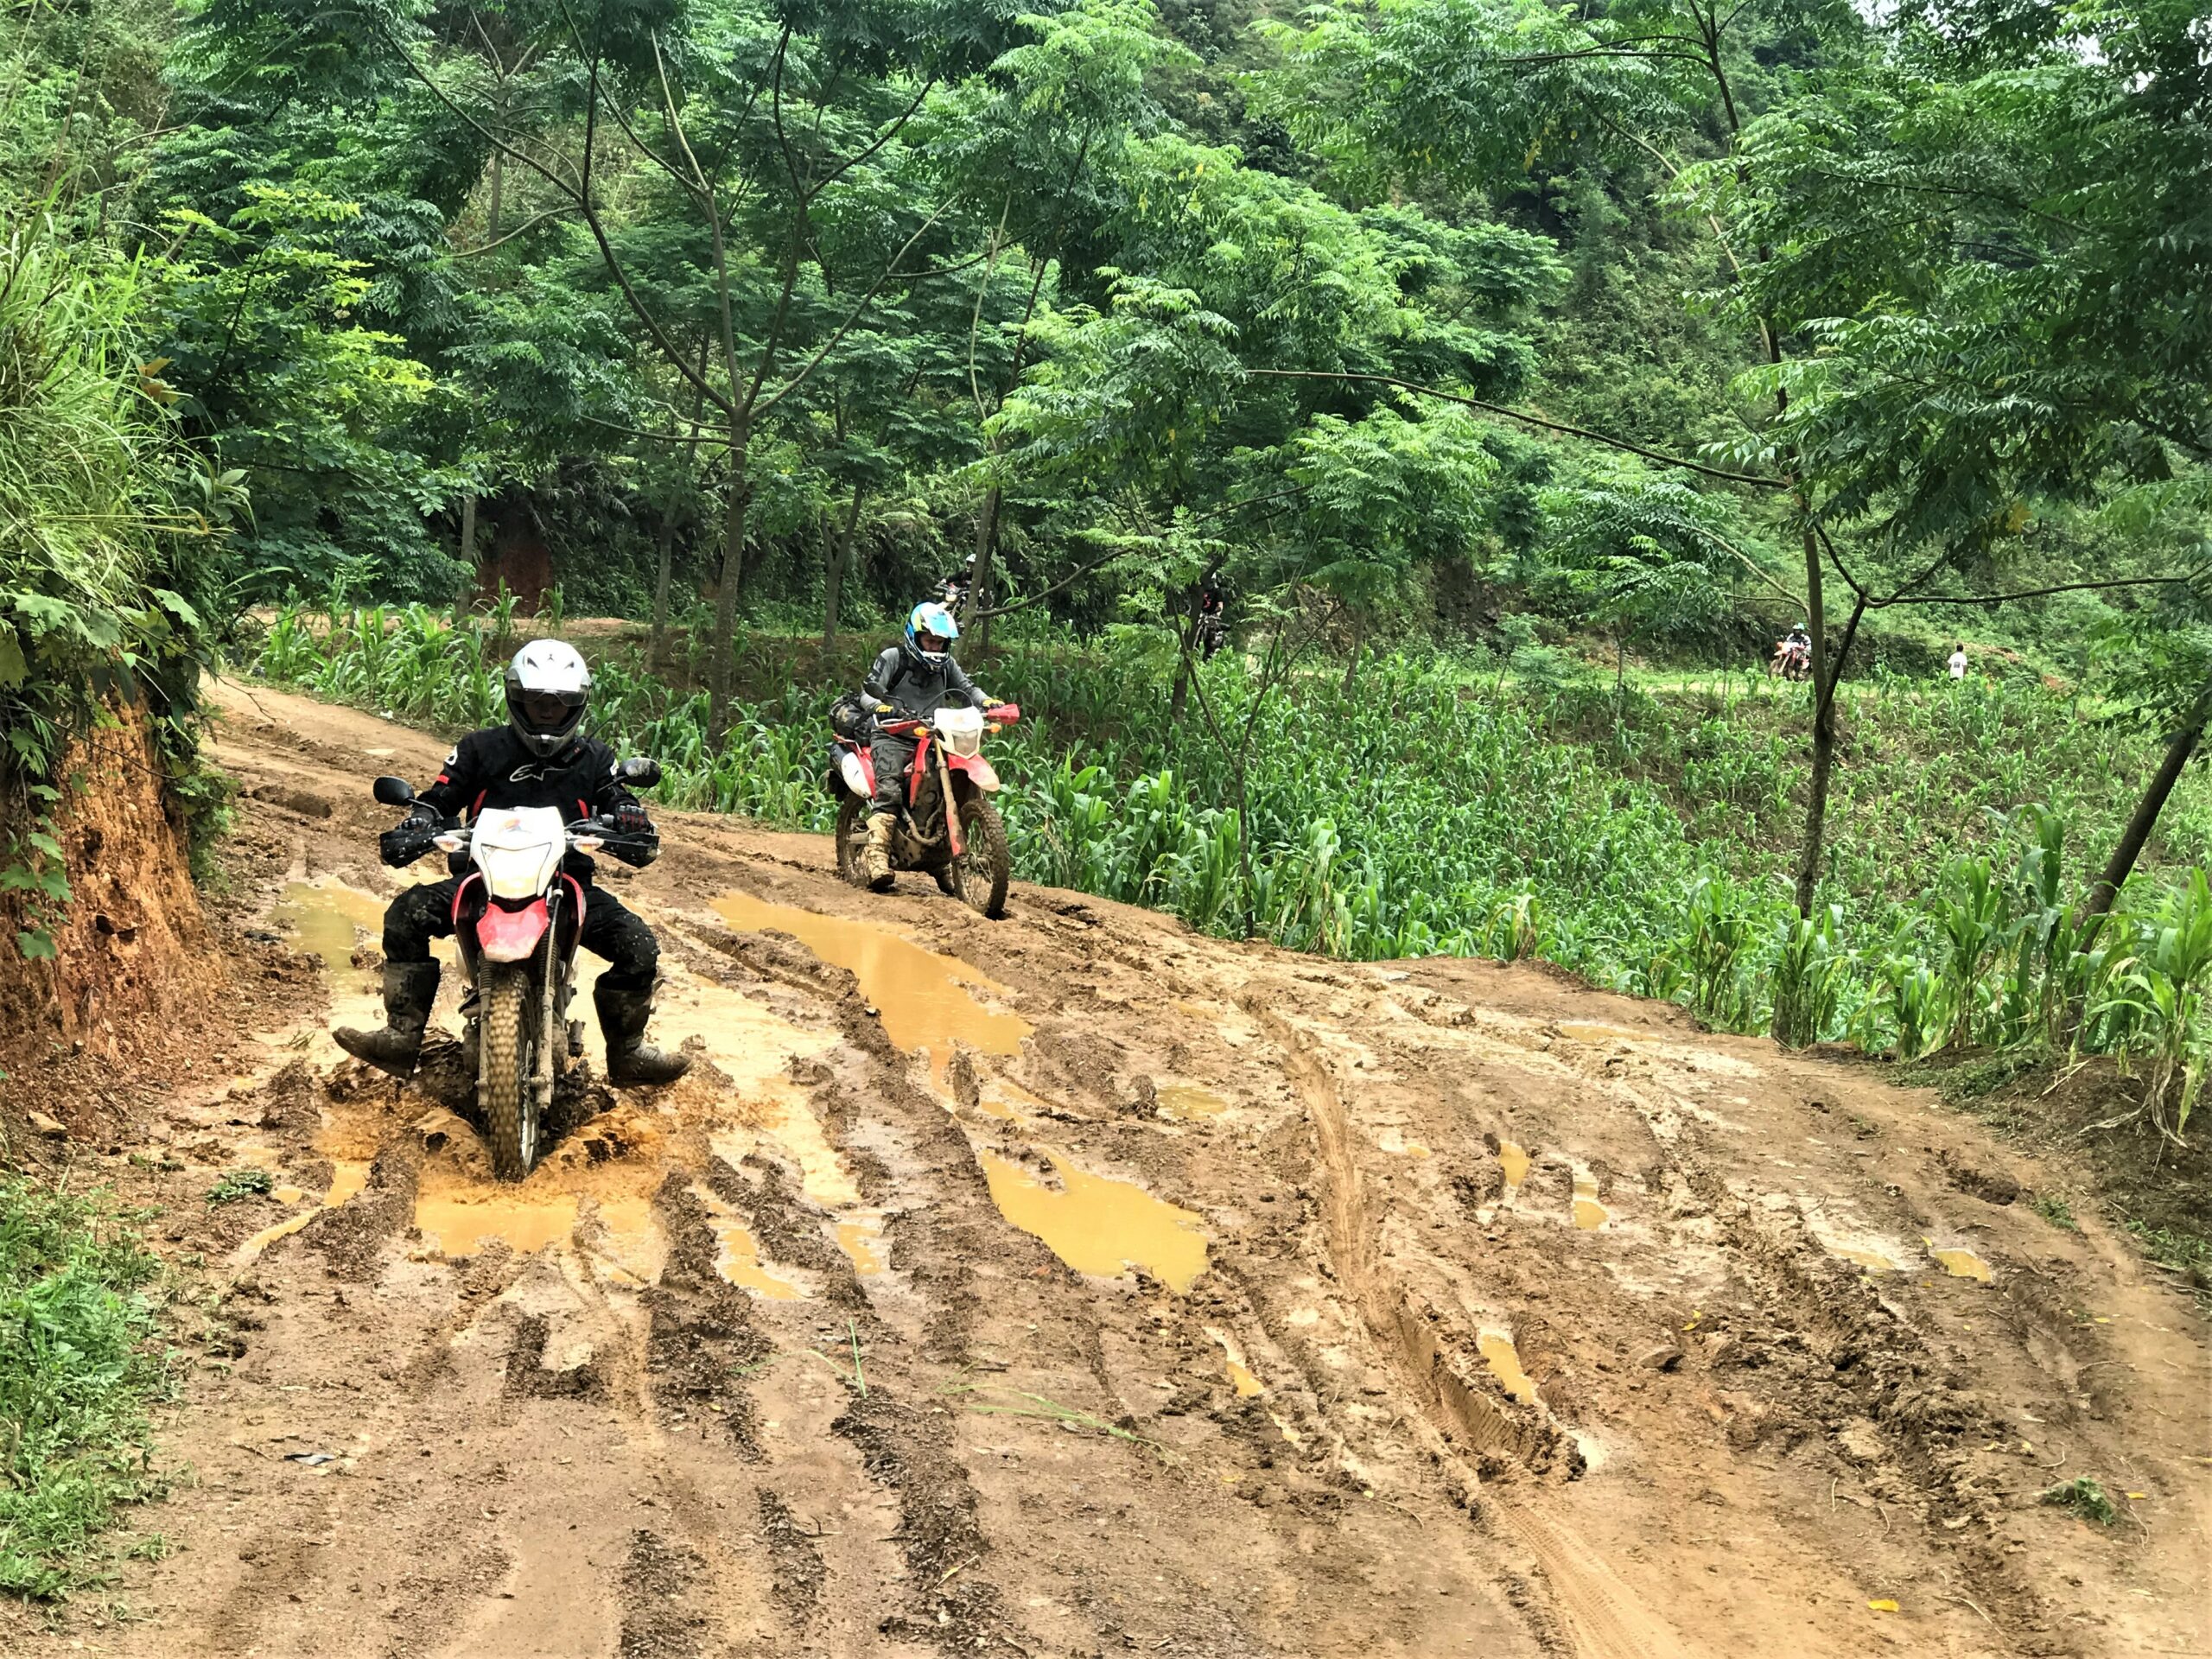 ride motorcycle in a muddy road in ha giang - best motorcycle rides in Vietnam